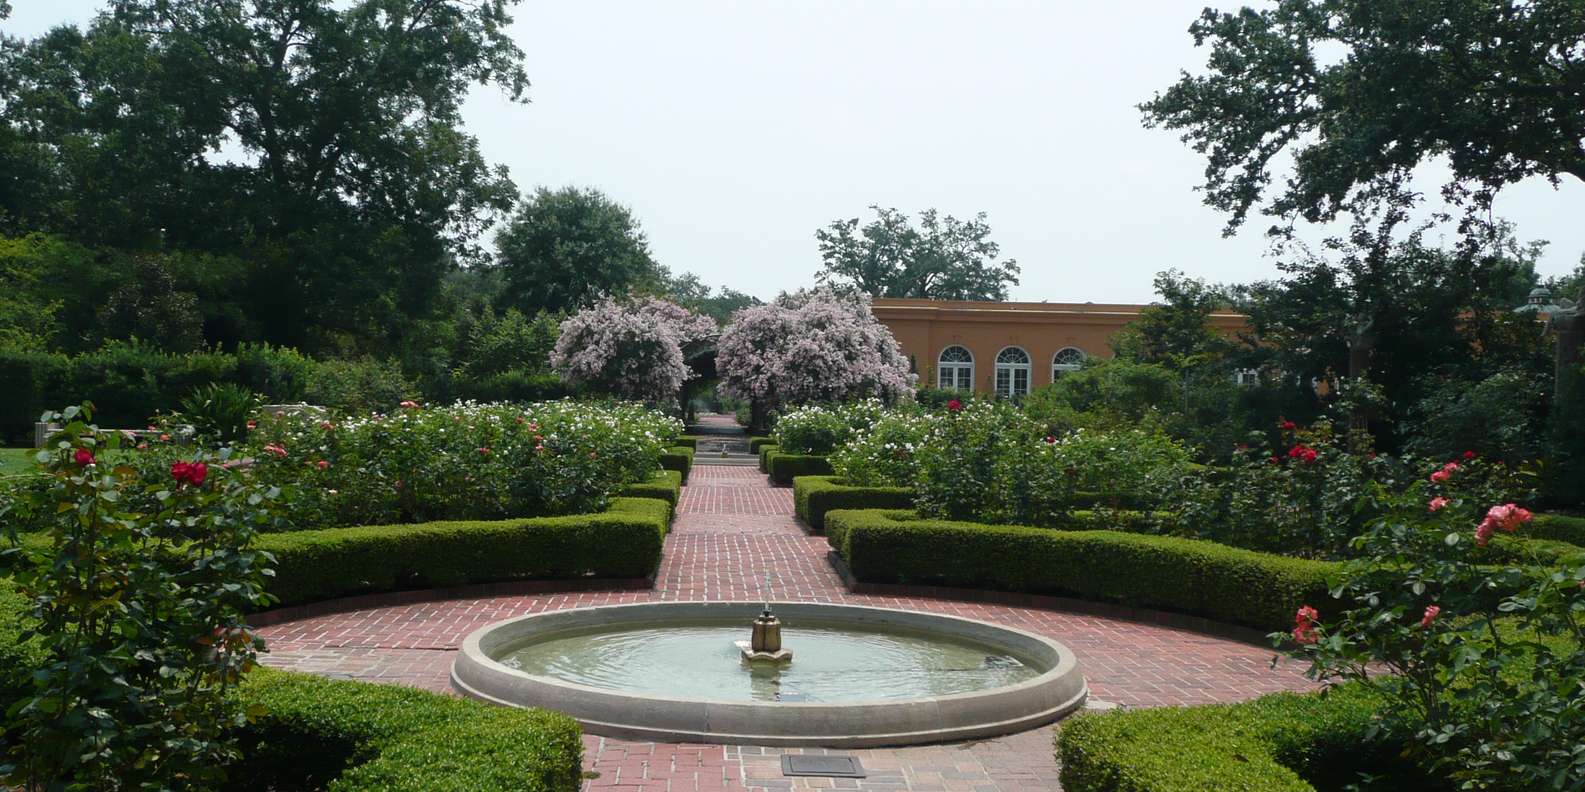 New Orleans Botanical Garden, New Orleans - Book Tickets & Tours